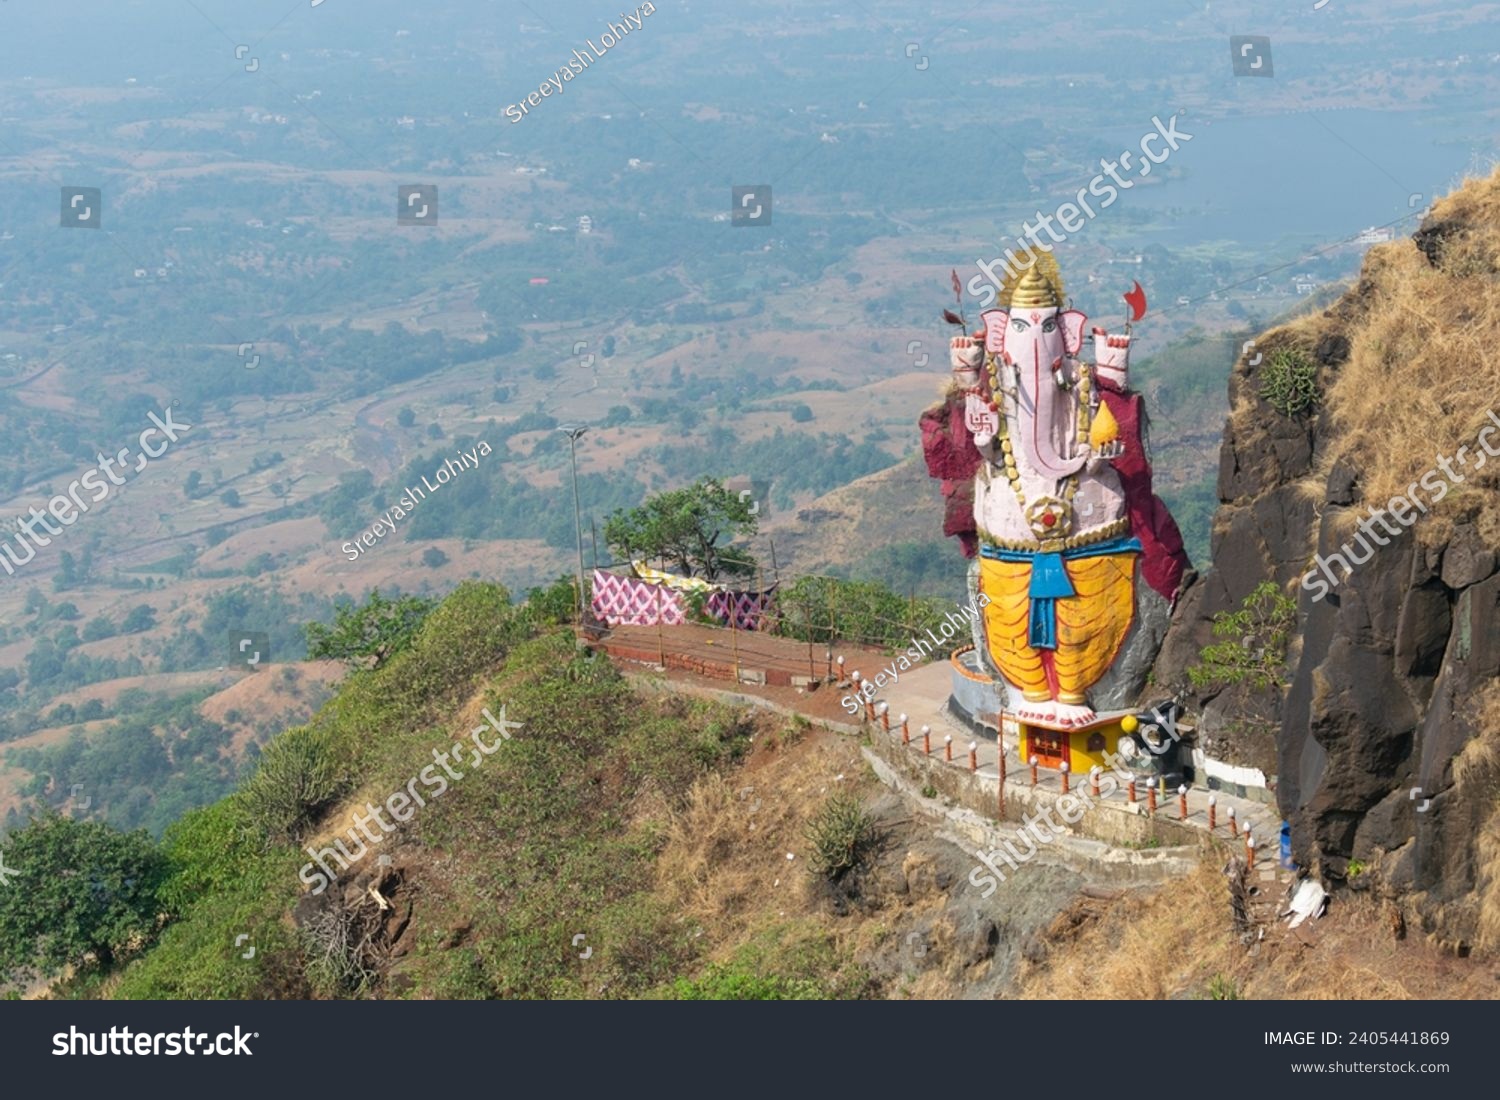 Lord Ganesha's Idol 
made of rock near Matheran, Maharashtra. Hinduism, sanatan, economics, India, Indian, Ganesh Chaturthi, pilgrimage, spiritual, religious, people, peace, nature, toy train, holiday #2405441869